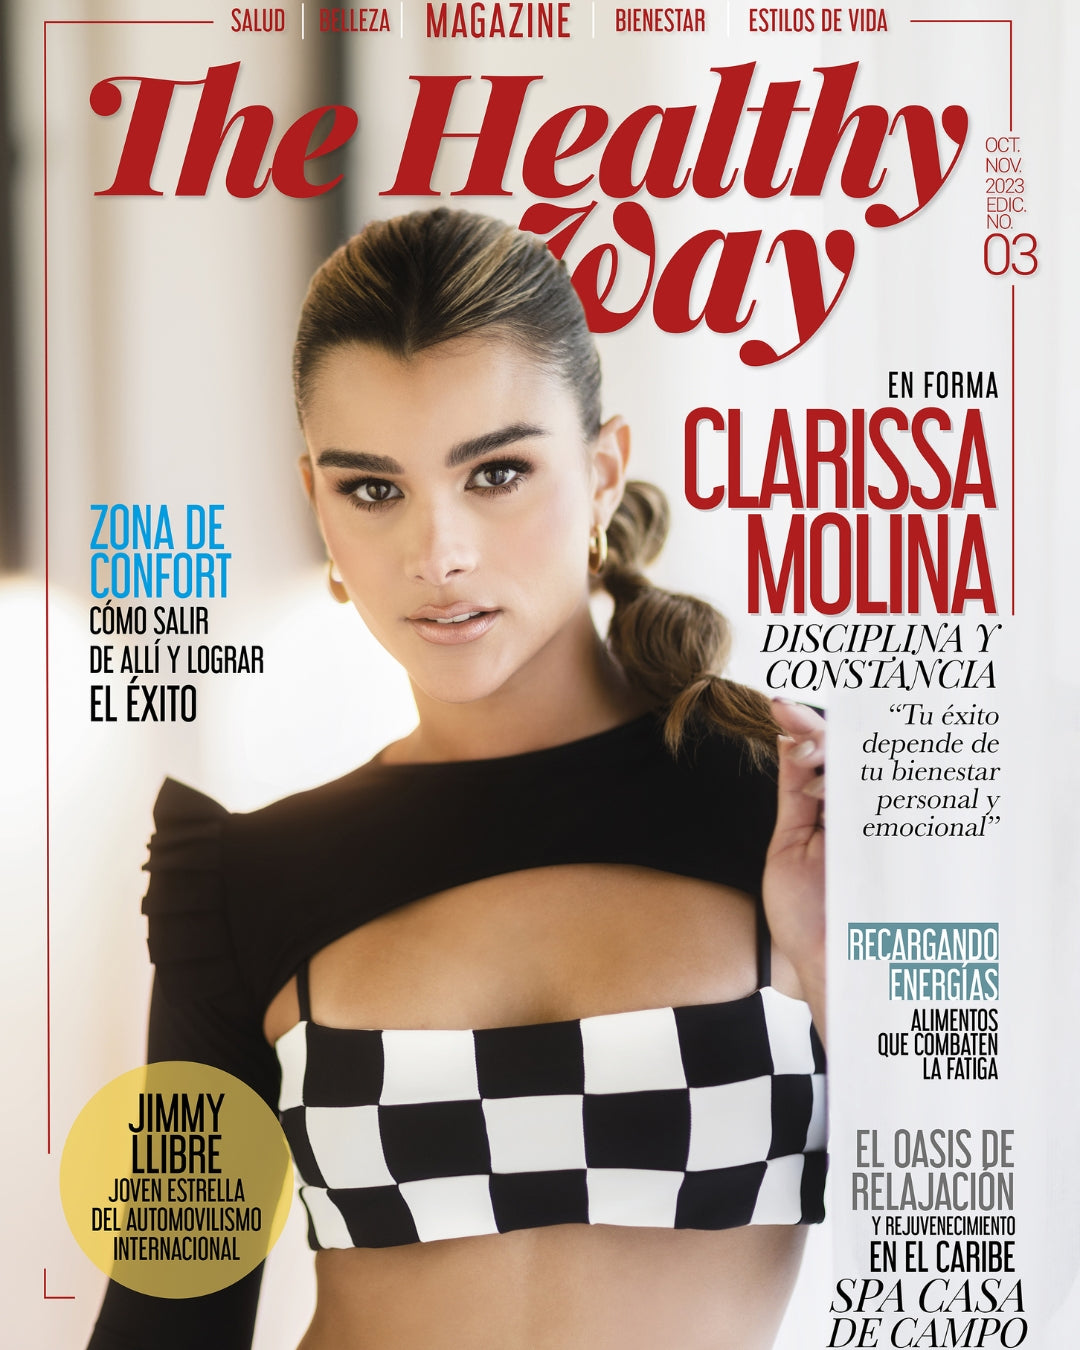 Clarissa Molina pagina web - noticia - the healthy way